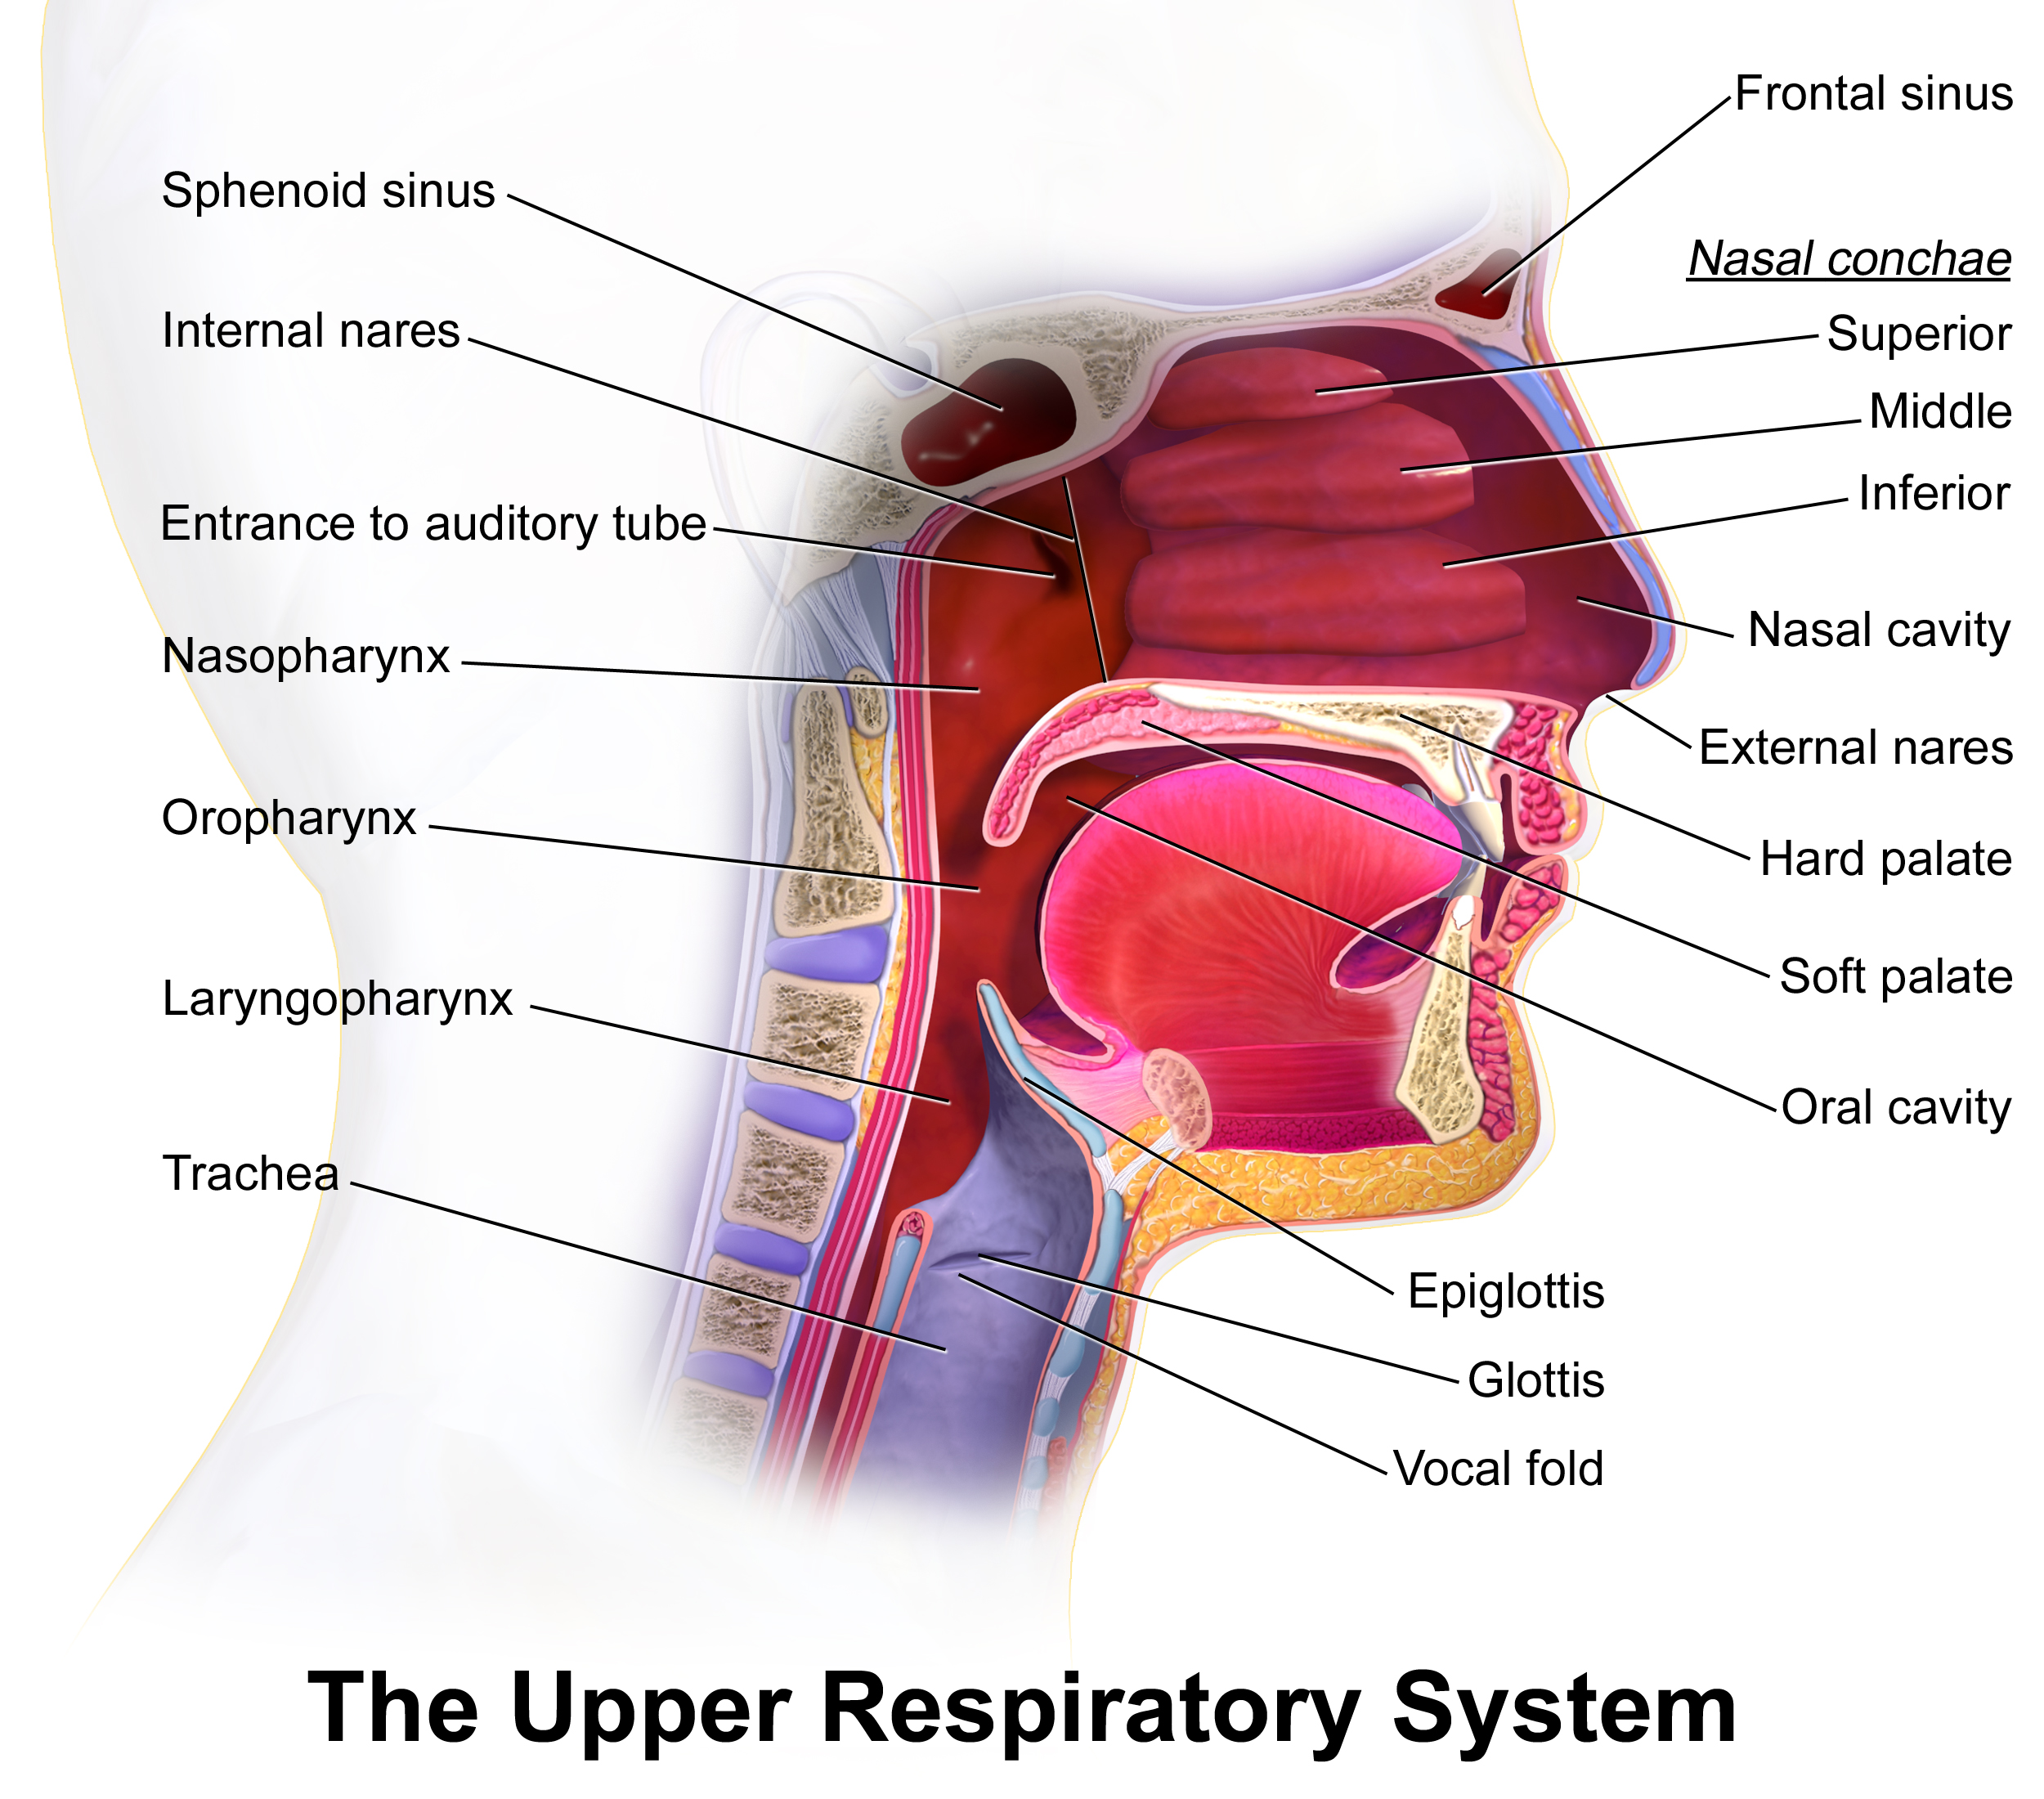 File:UpperRespiratorySystem.png